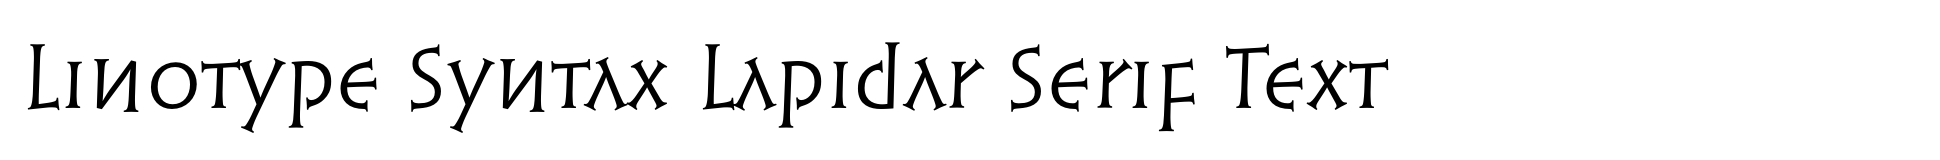 Linotype Sintaxis Lapidar Serif Texto